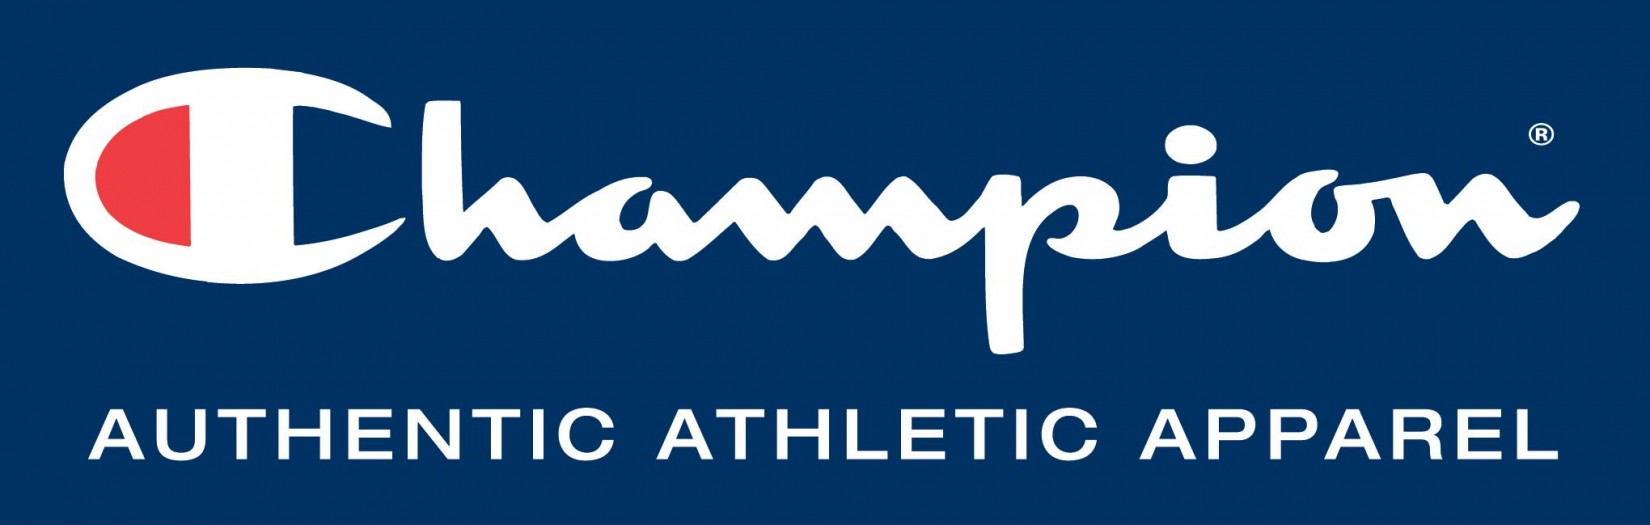 champion shoes logo